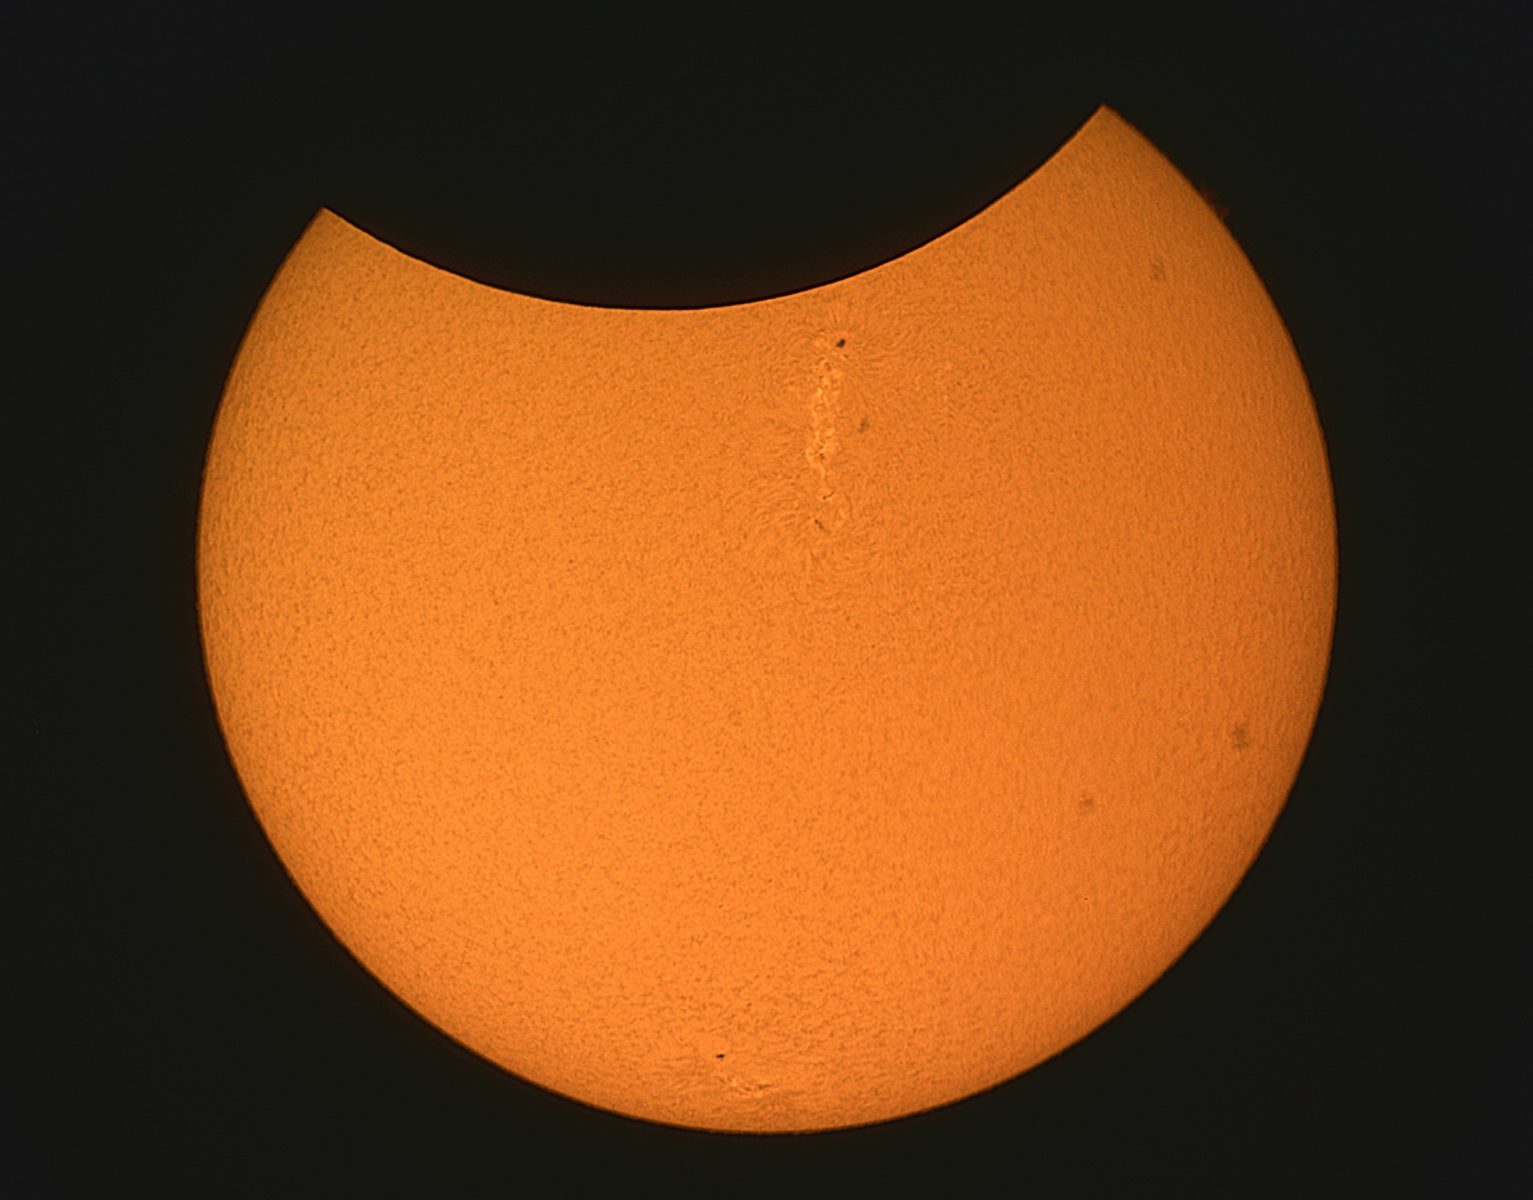 Solar eclipse, August 21, 2017